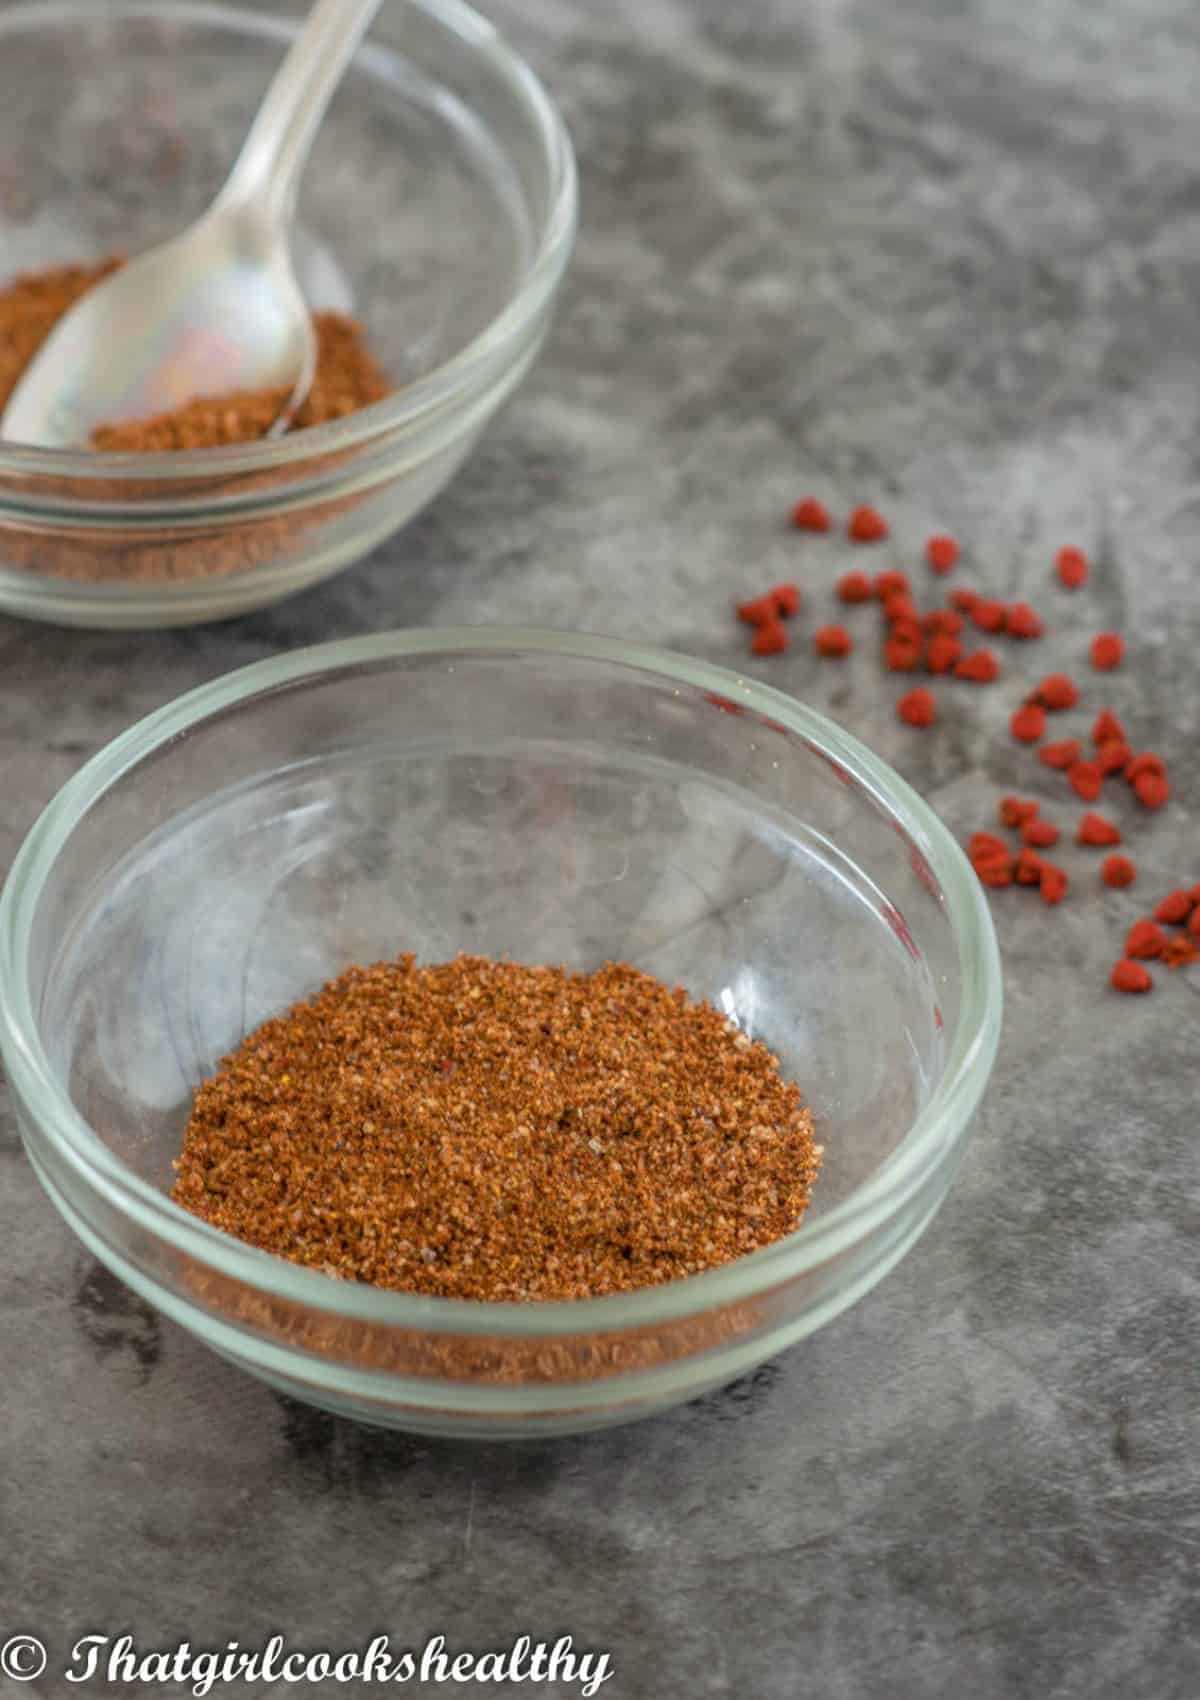 sazon with annatto seeds